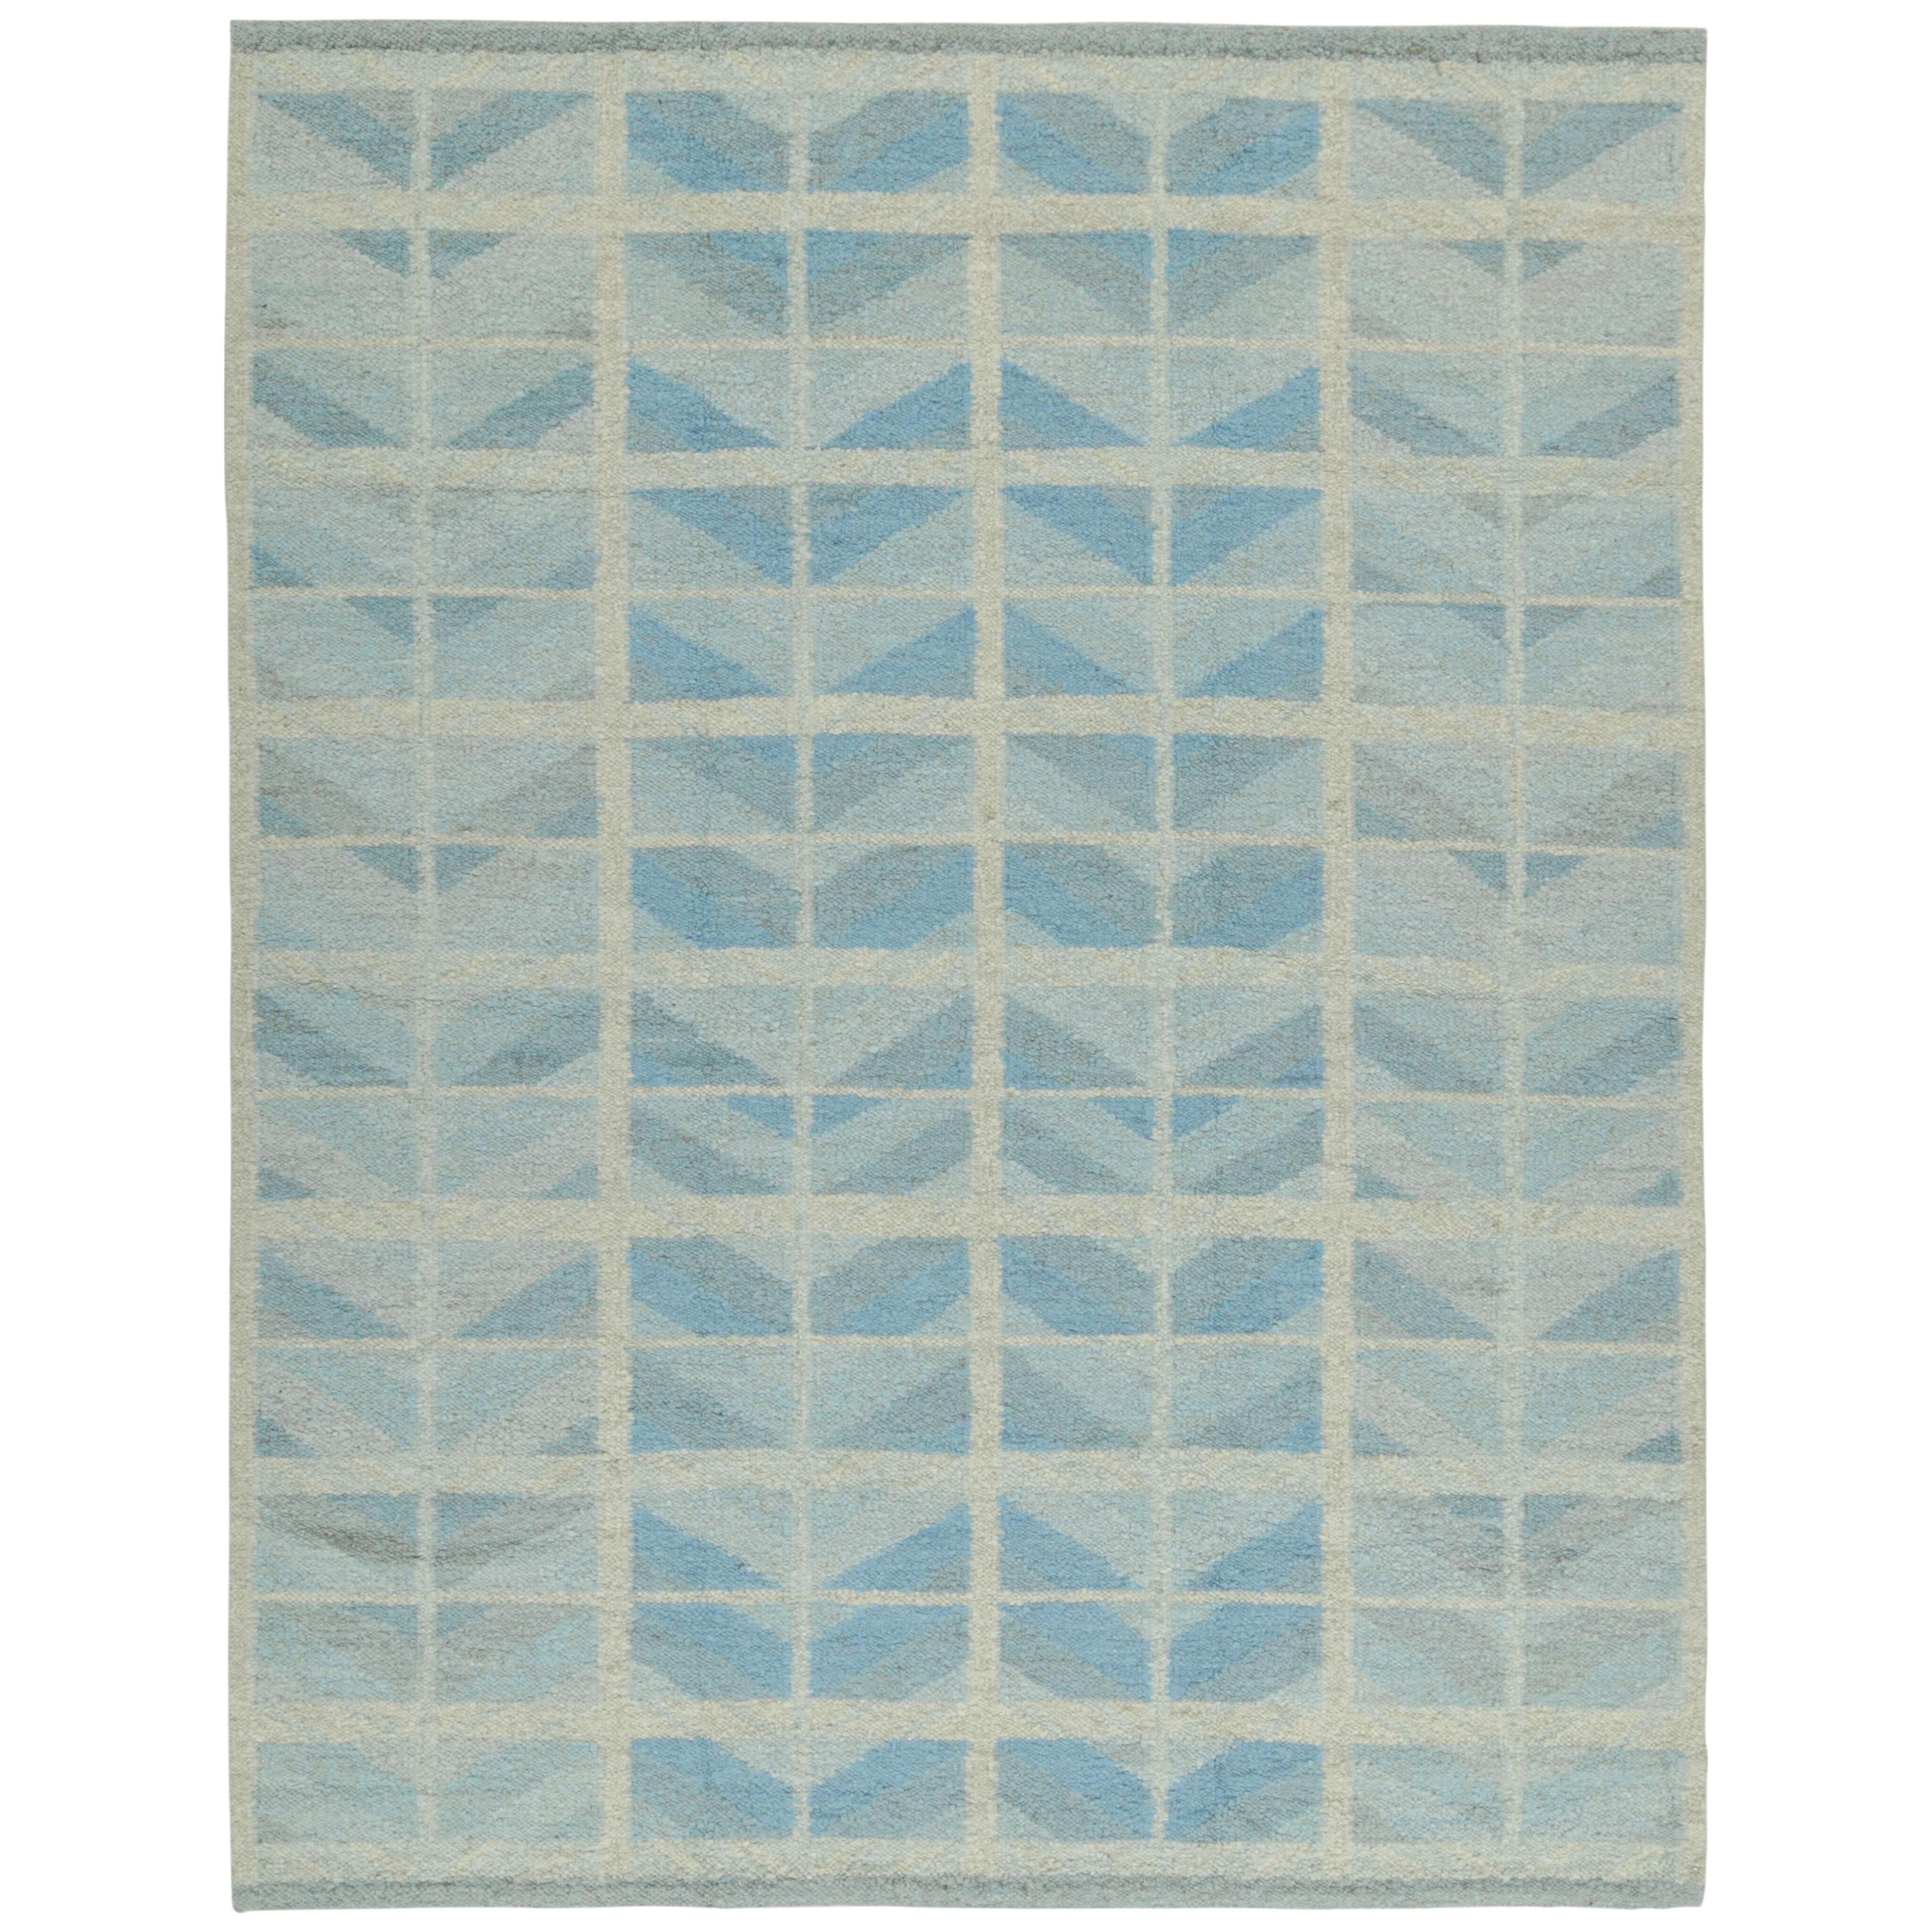 Rug & Kilim’s Scandinavian Style Kilim With Geometric Patterns In Blue & Grey